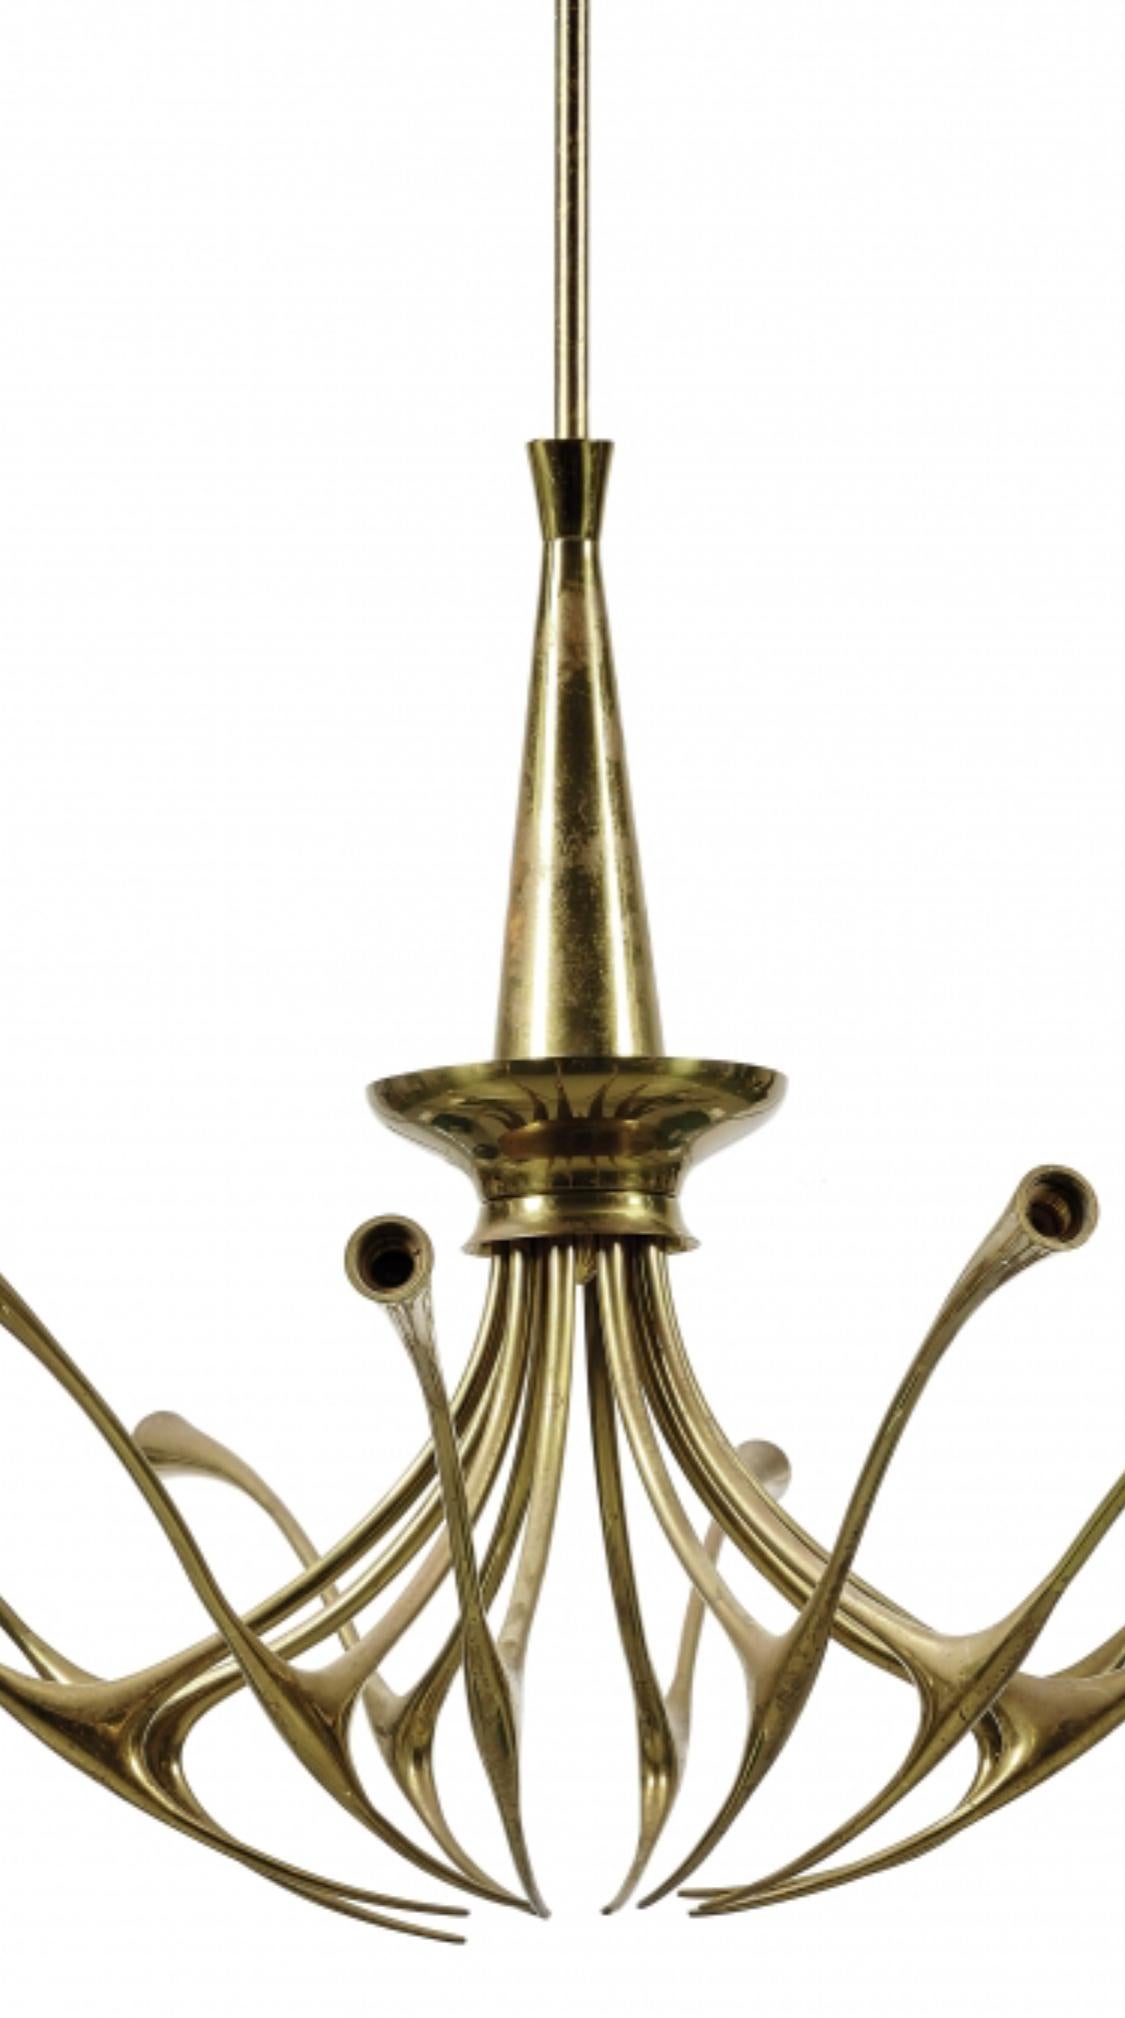 Rare and beautiful brass pendant by Oscar Torlasco, Italy, 1950s.